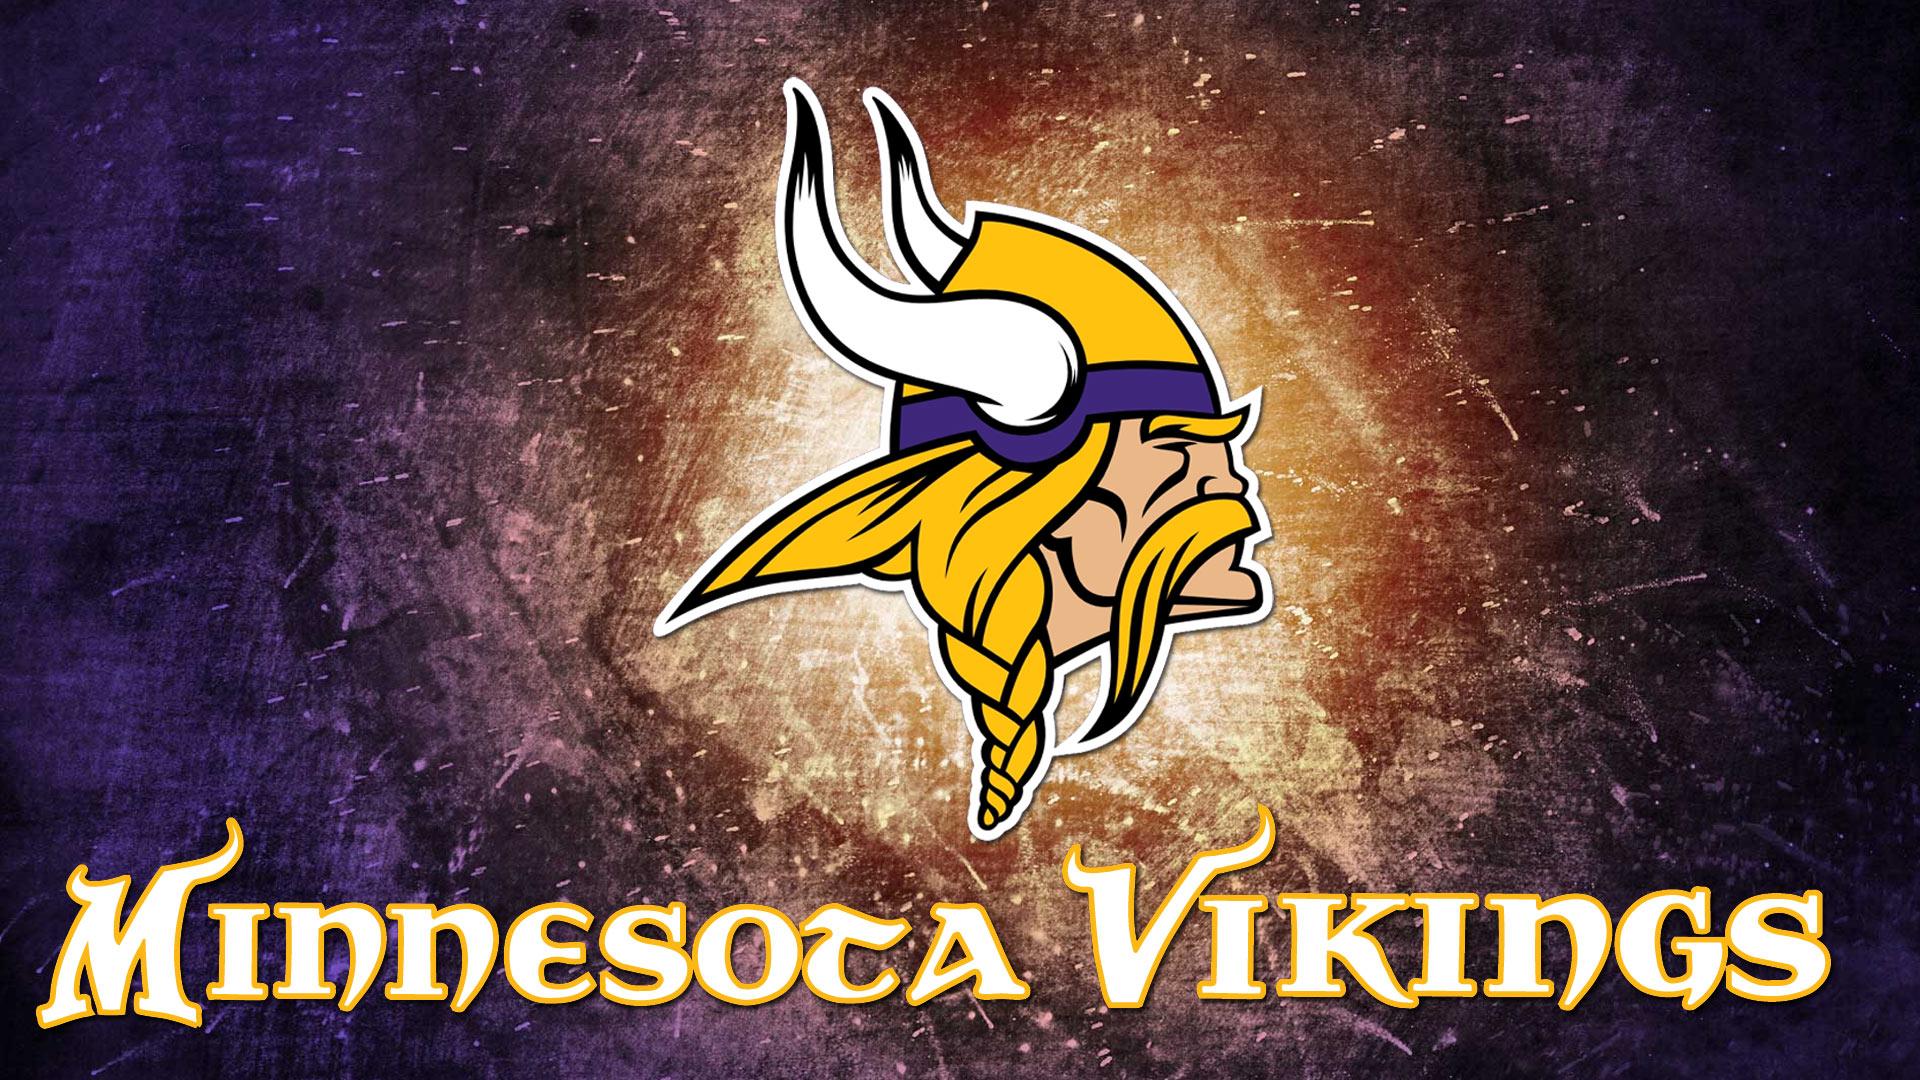 Minnesota Vikings Wallpaper and Background Image